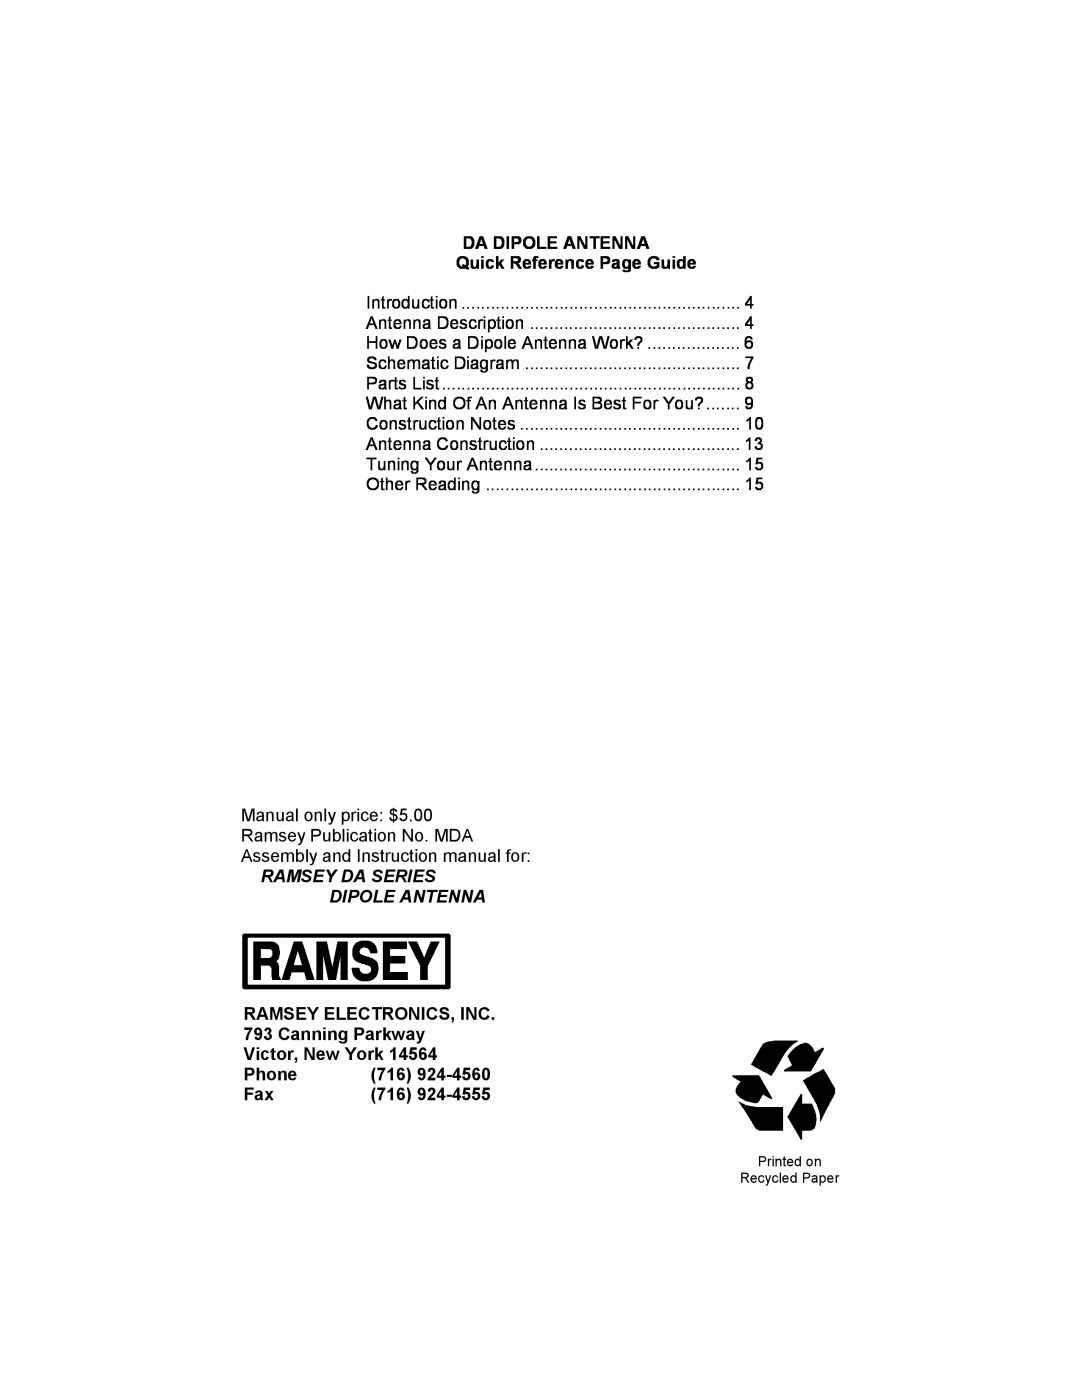 Ramsey Electronics DA-160 Ramsey Da Series Dipole Antenna, Da Dipole Antenna, Quick Reference Page Guide, Victor, New York 